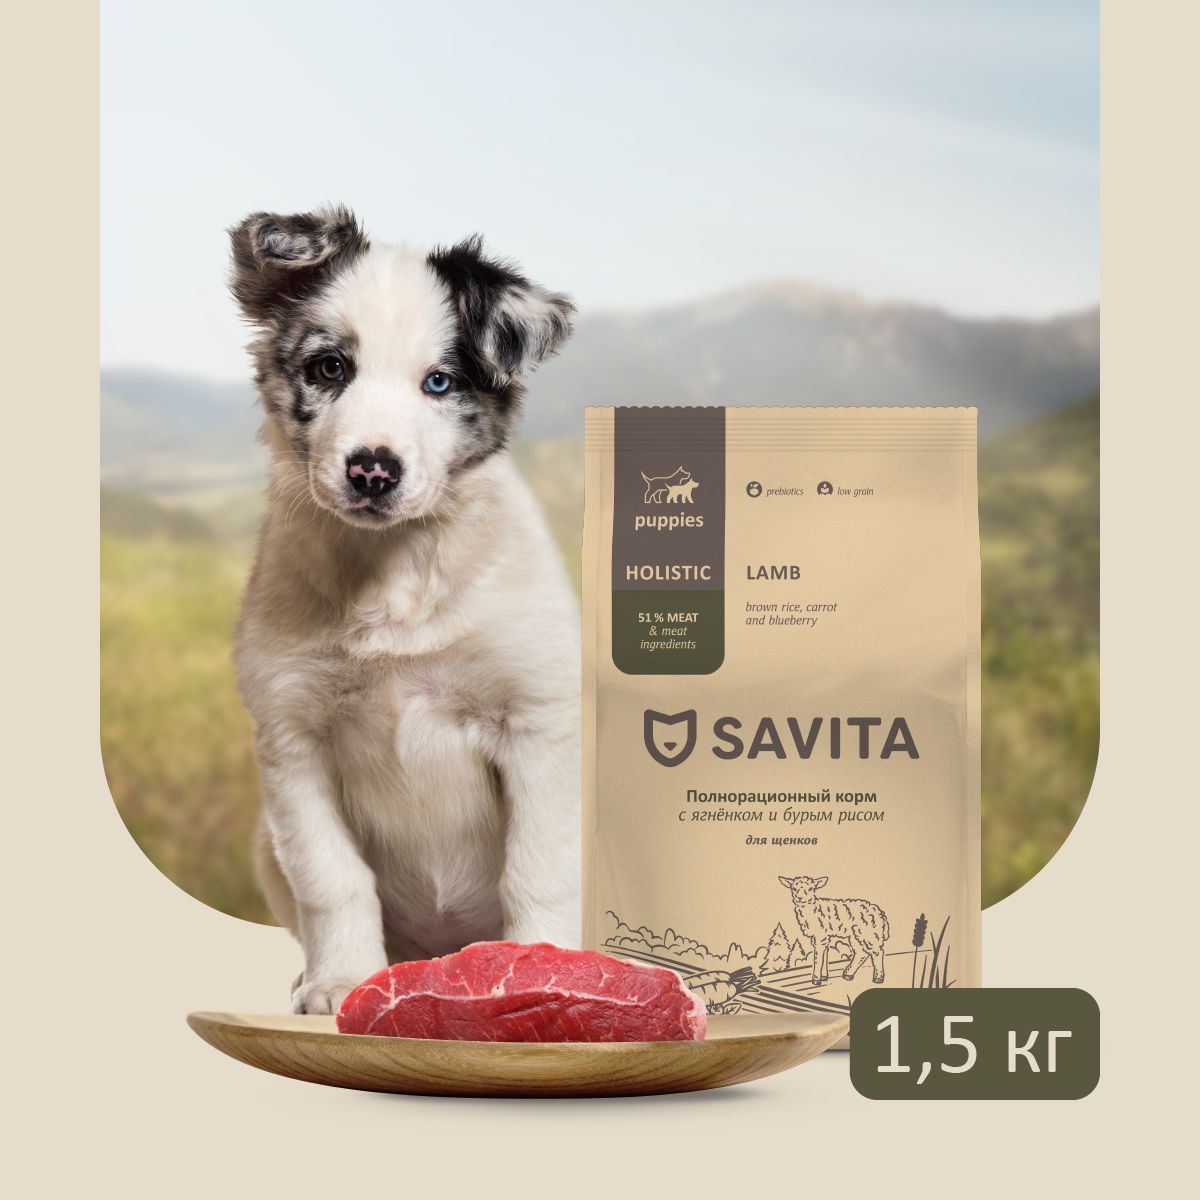 Savita для щенков. Сухой корм Savita для щенков. Корм савита для щенков ПЕТОБЗОР. Savita для щенков со злаками.